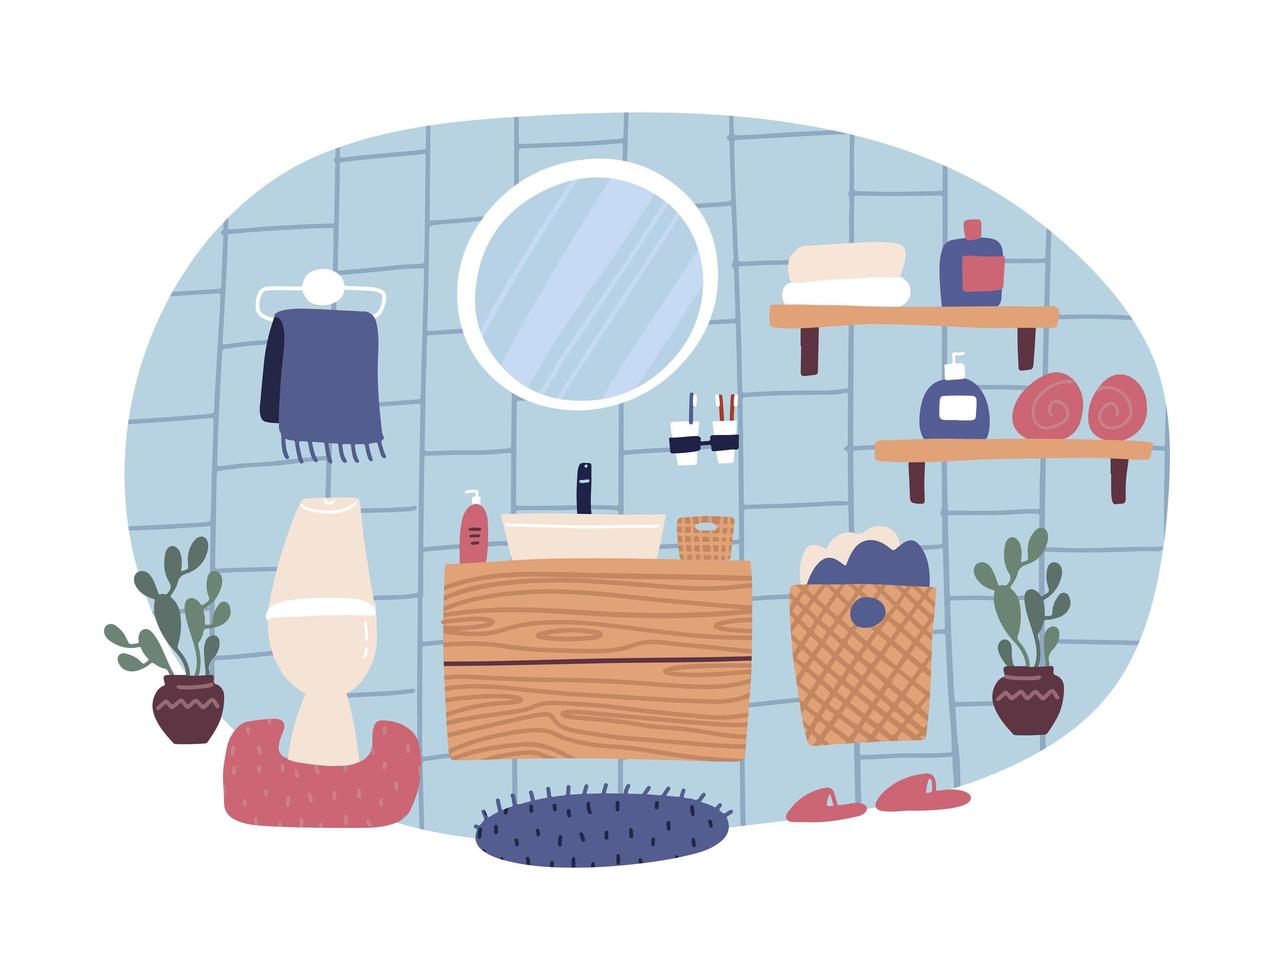 lindo interior de baño en estilo escandinavo de moda. rutina diaria lavabo con espejo e inodoro. concepto aislado de higiene matutina. vector plano en estilo de dibujos animados